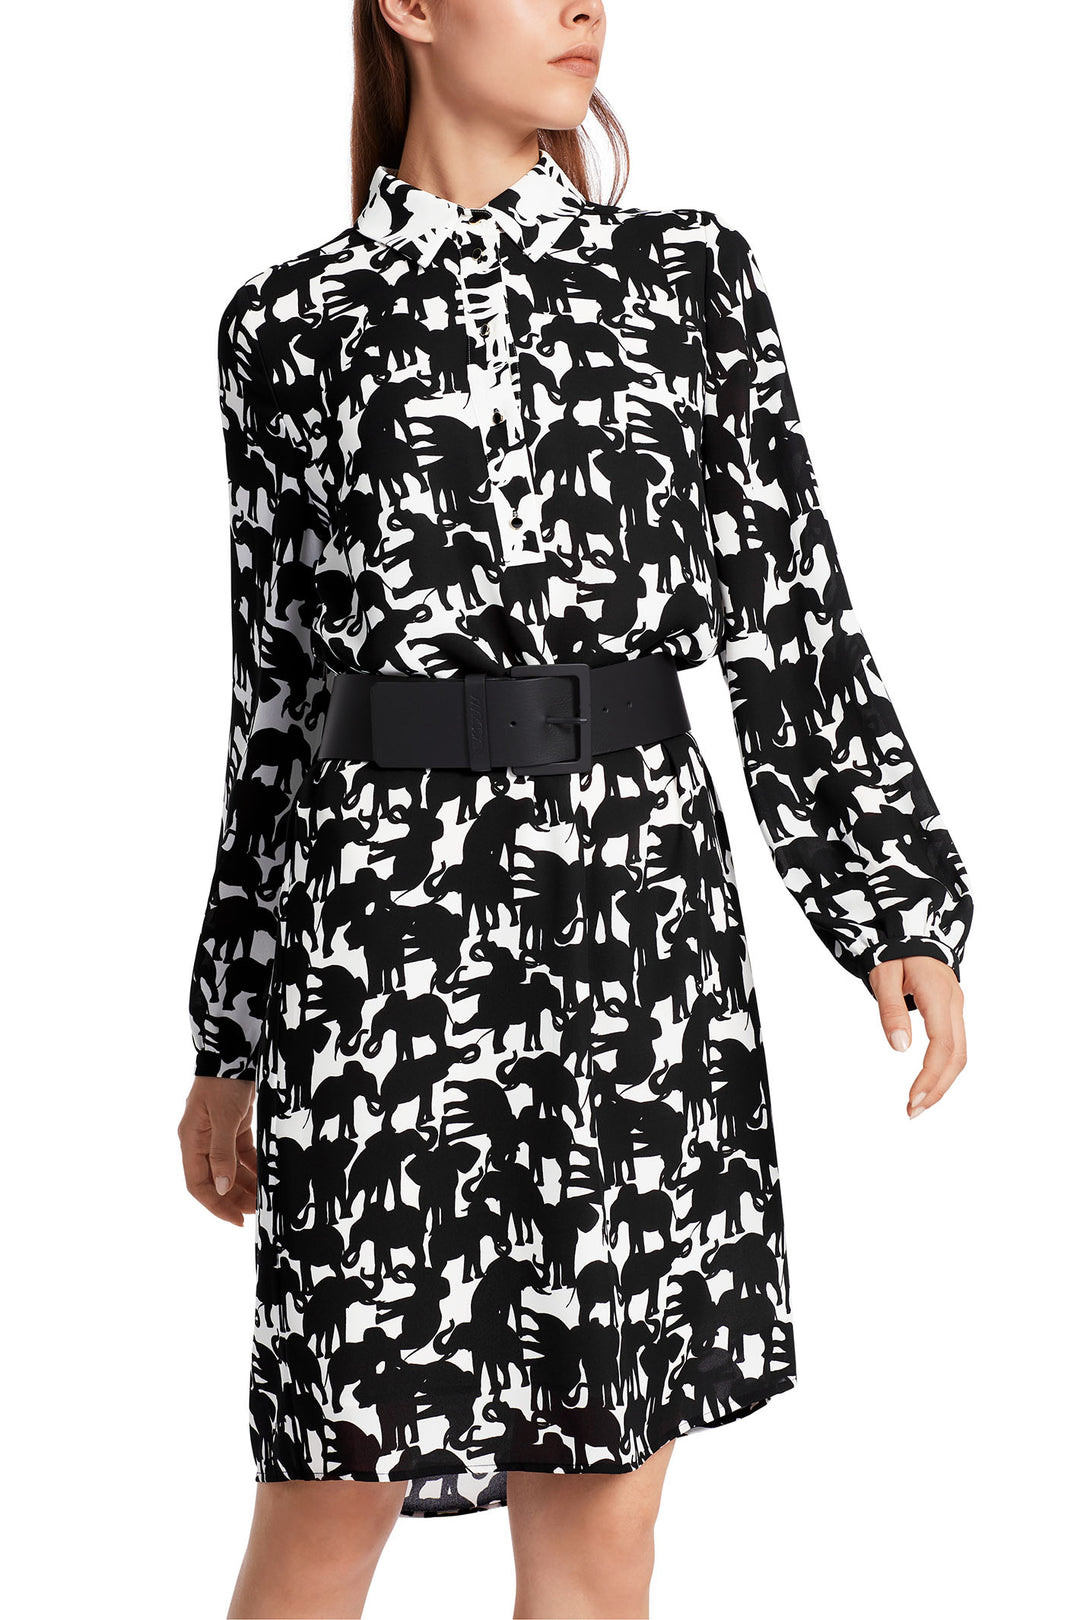 Marc Cain Collection WC 21.19 W13 910 Black White Elephant Print Dress - Olivia Grace Fashion